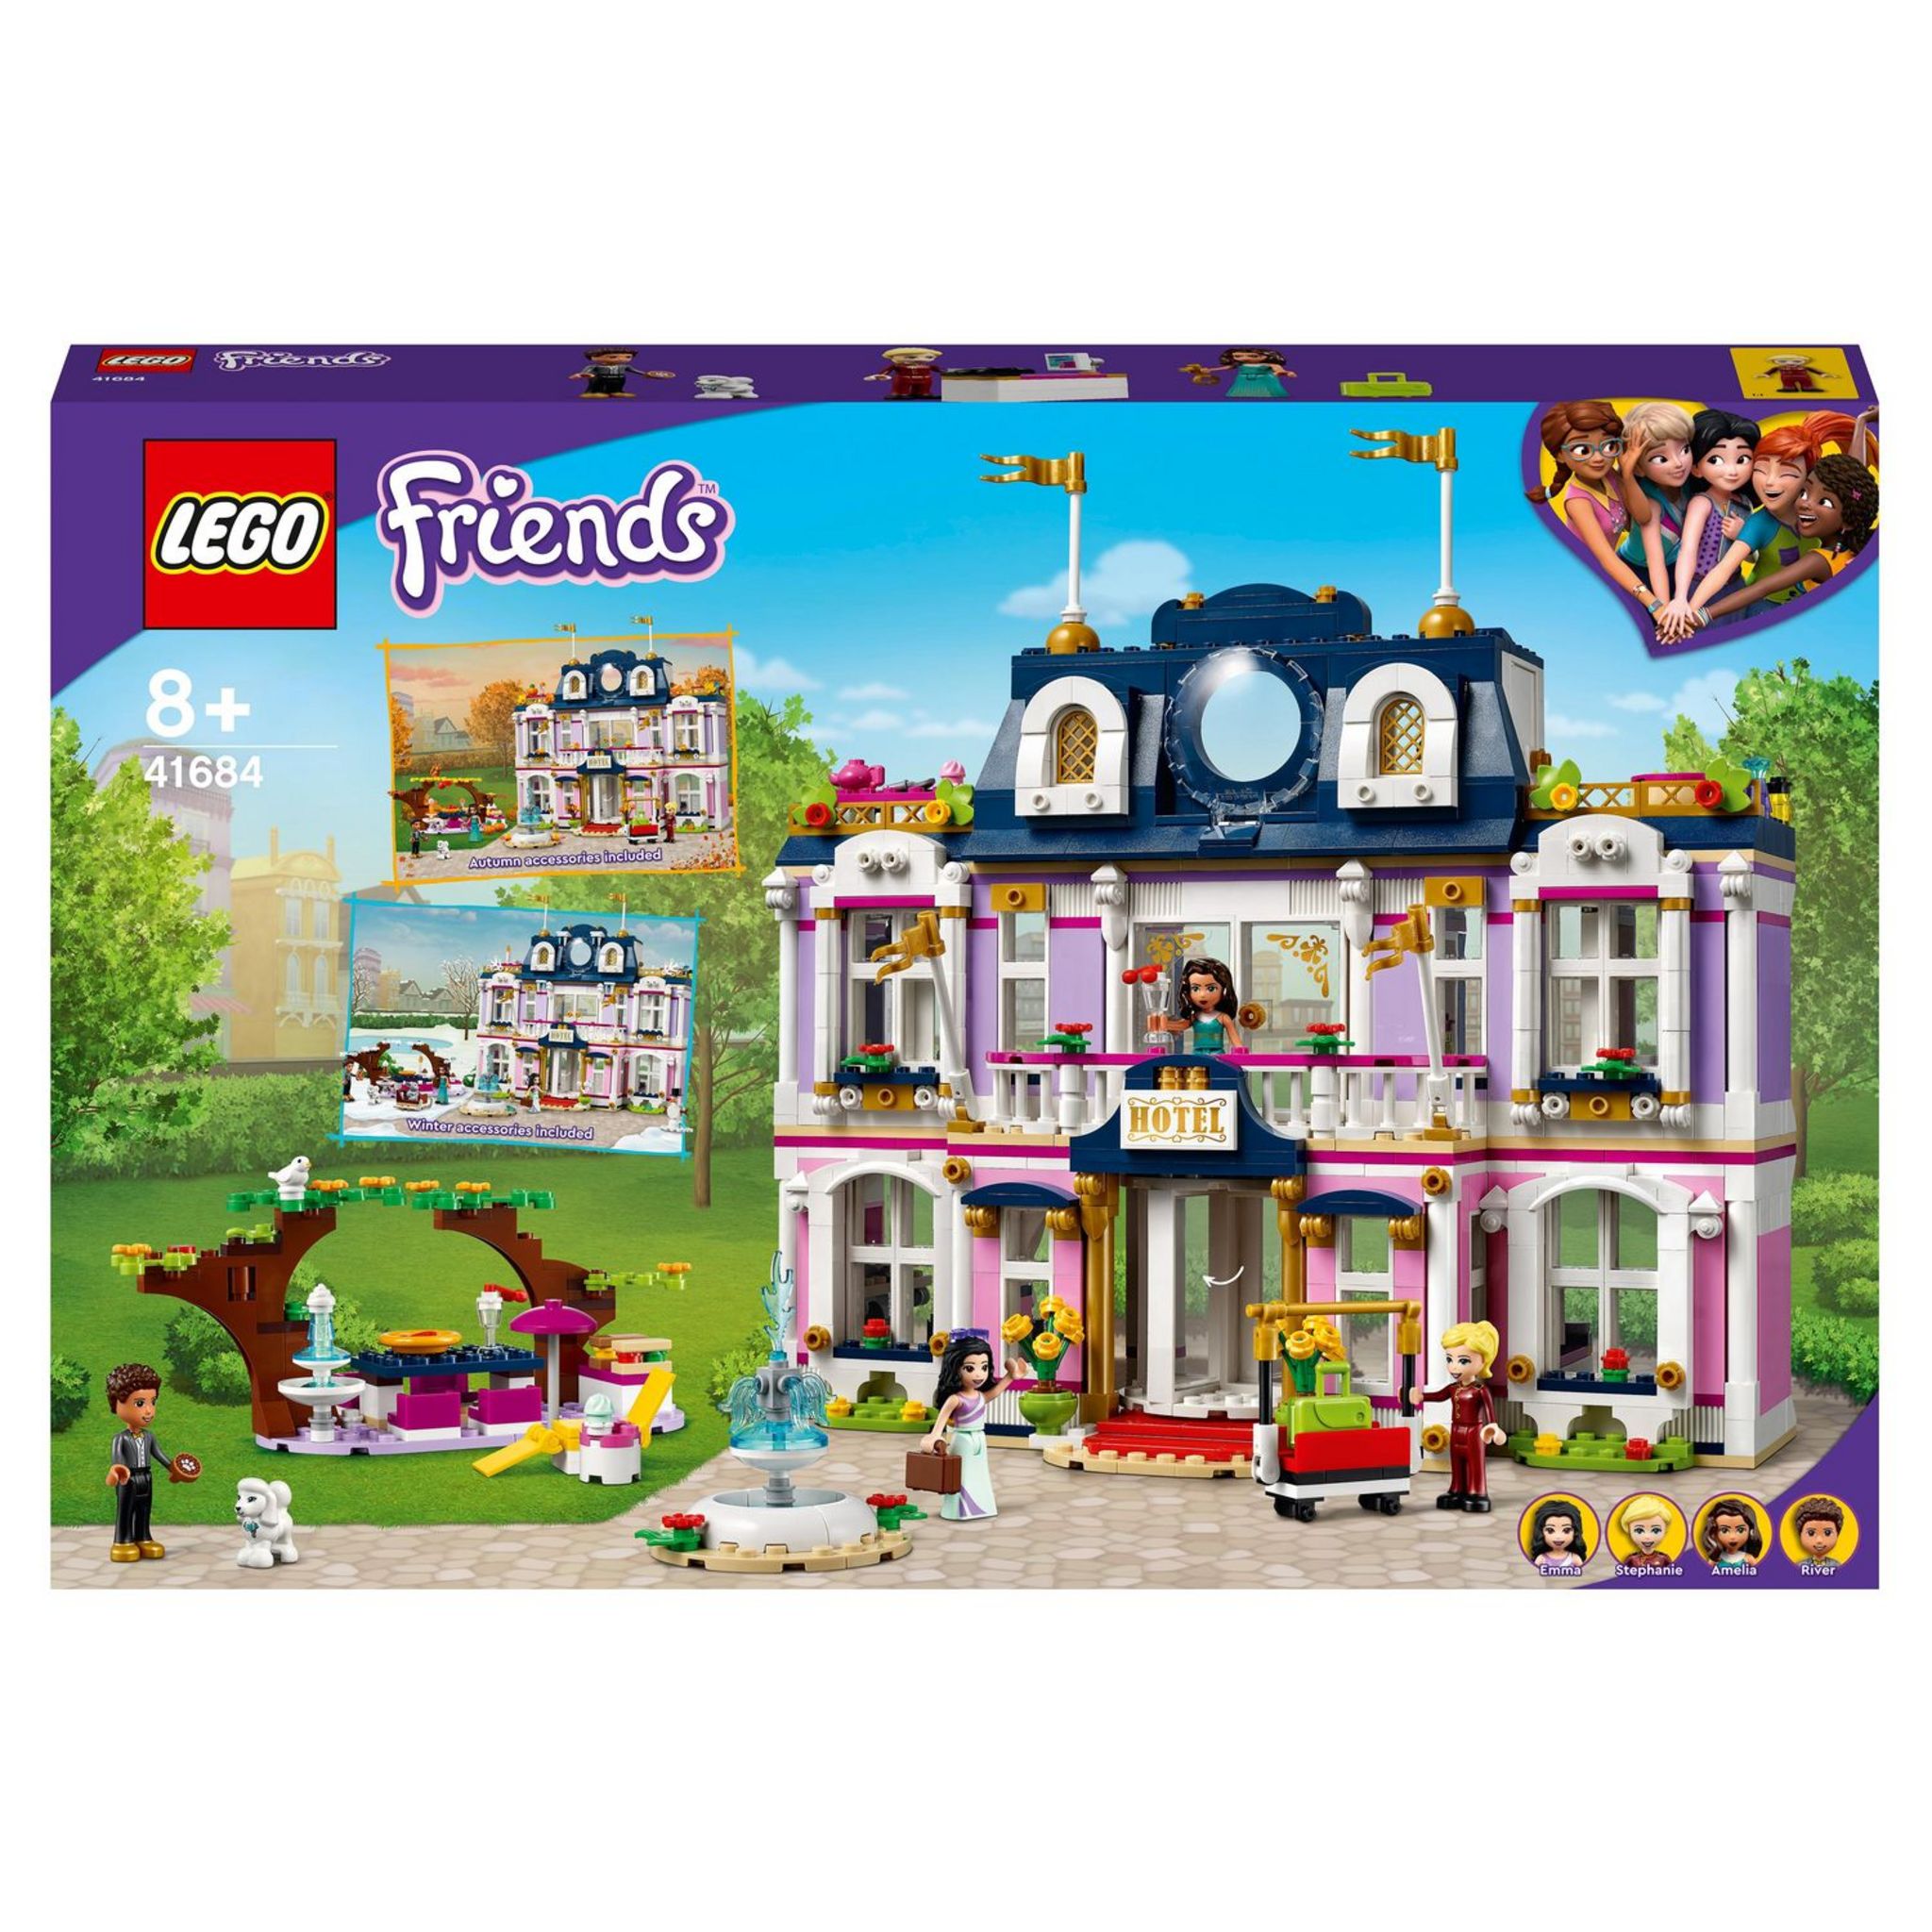 LEGO Friends 41684 - Heartlake City Grand Hotel pas cher 